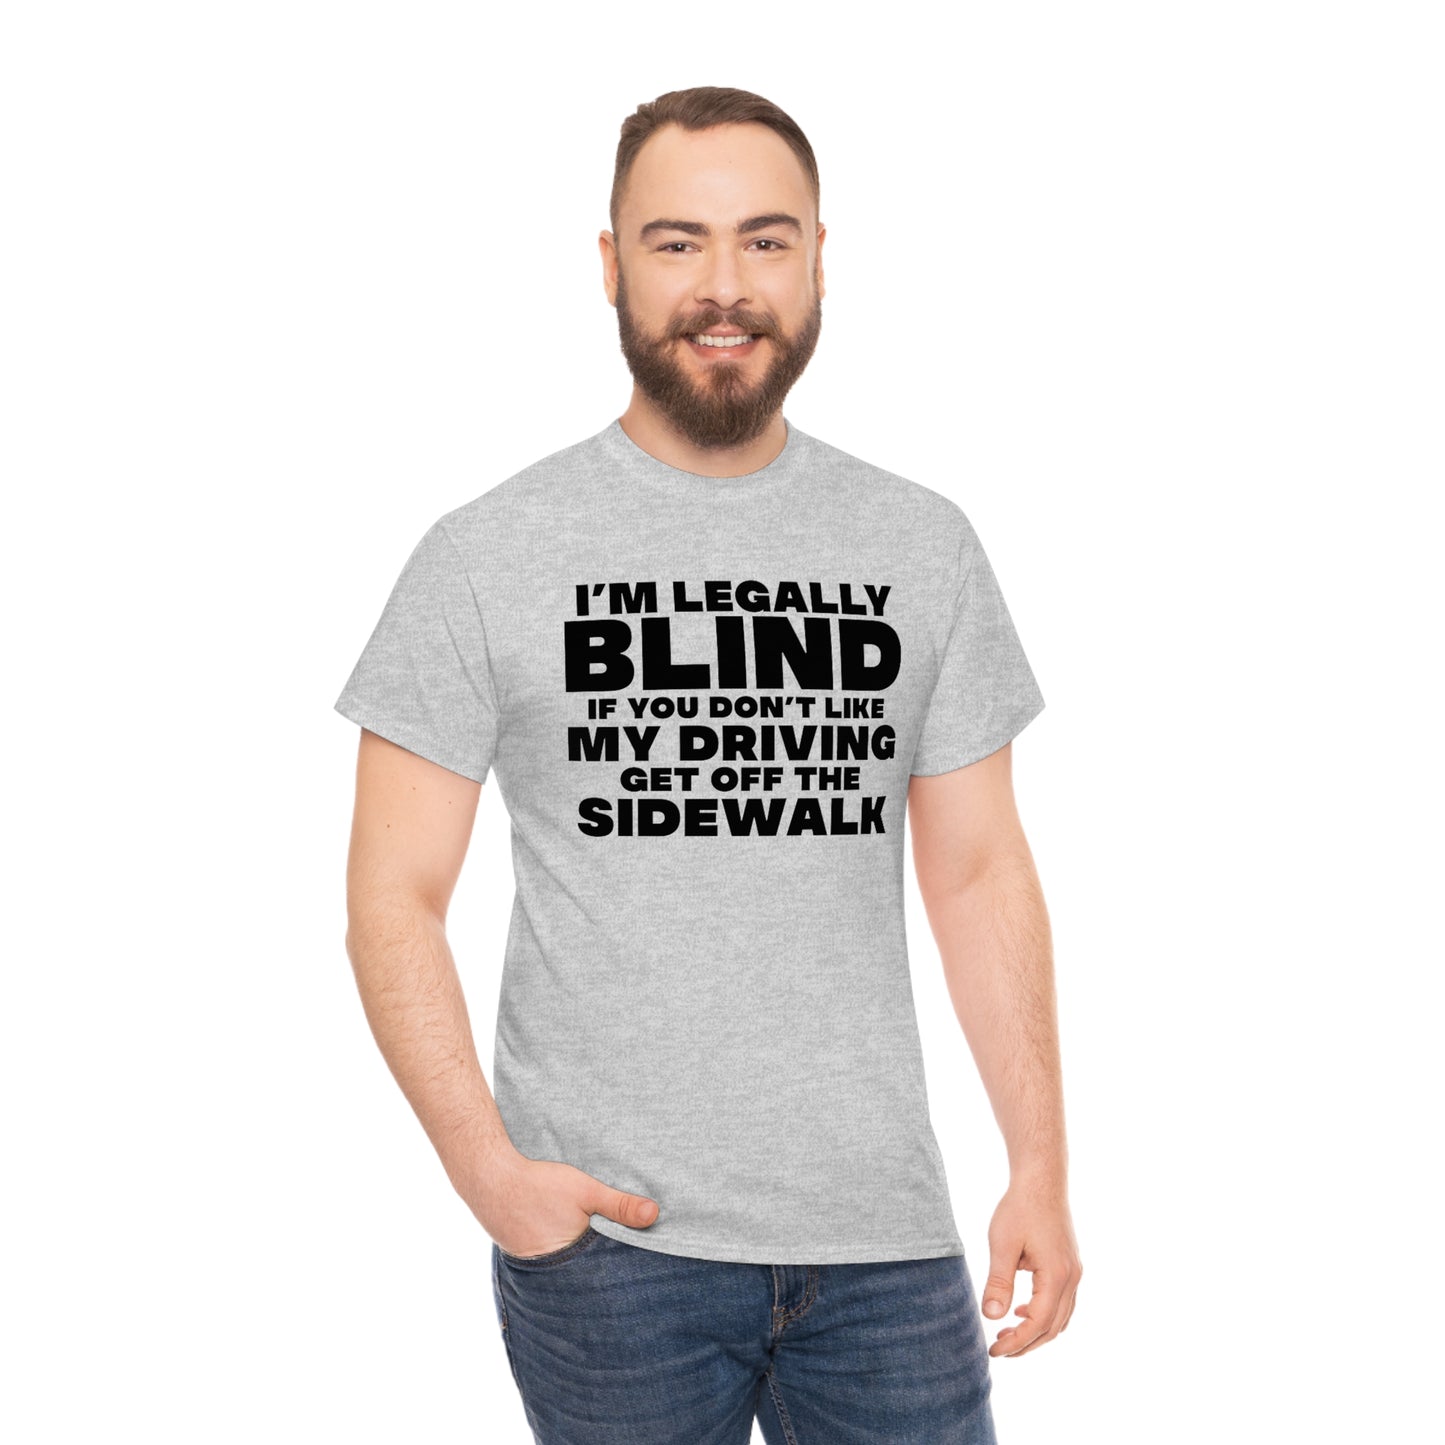 I'M LEGALLY BLIND T-SHIRT